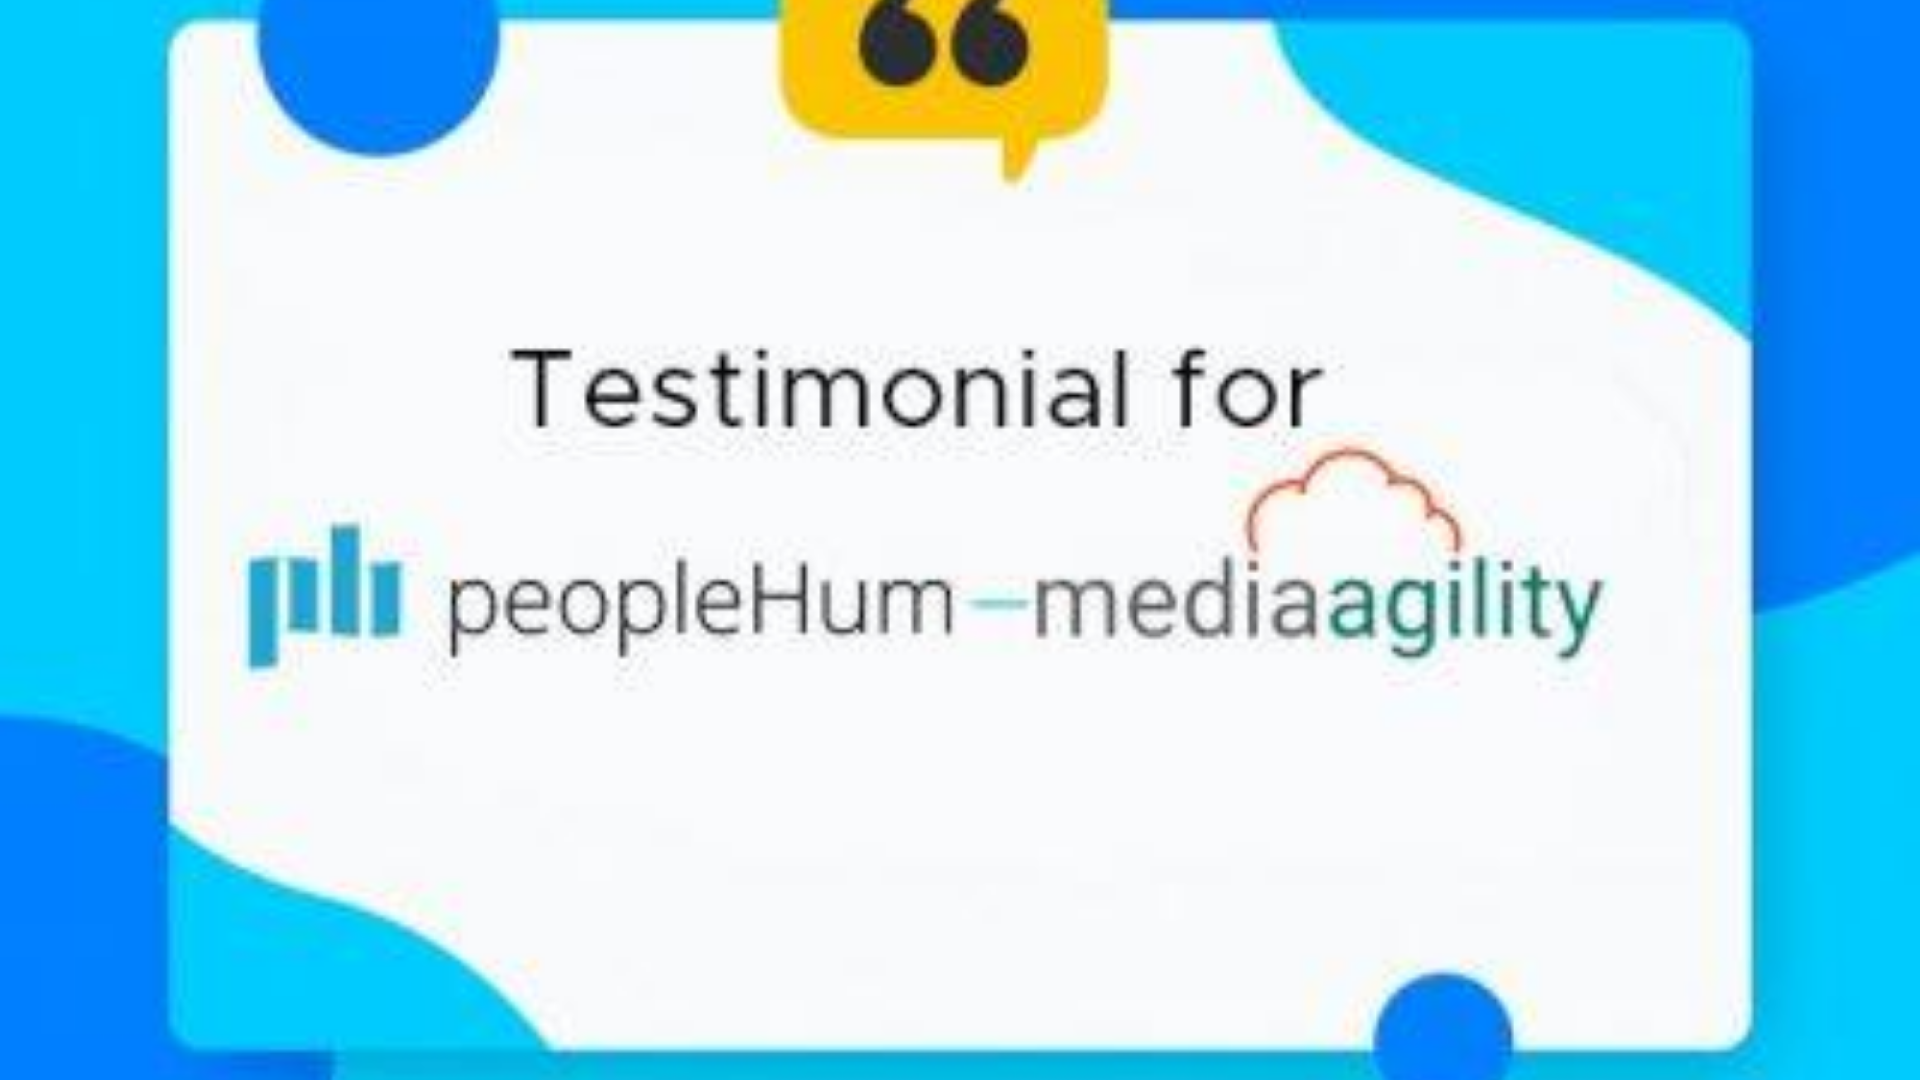 MediaAgility - Testimonial for peopleHum